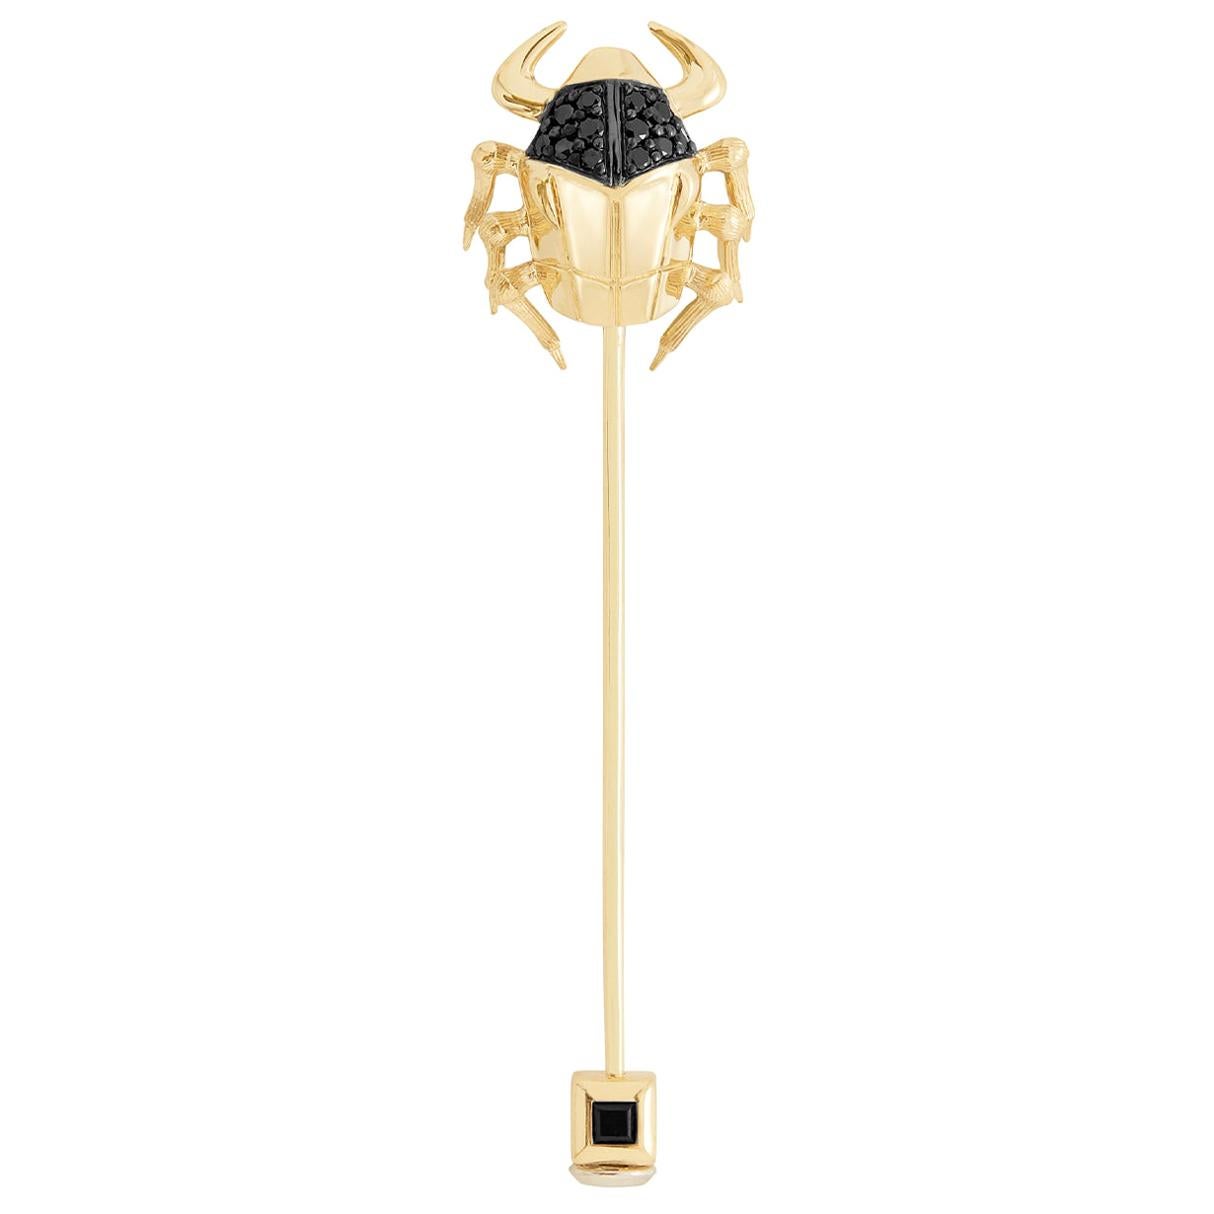 Stephen Webster Jitterbug Toro Beetle 18 Carat Gold and Black Diamond Lapel Pin For Sale